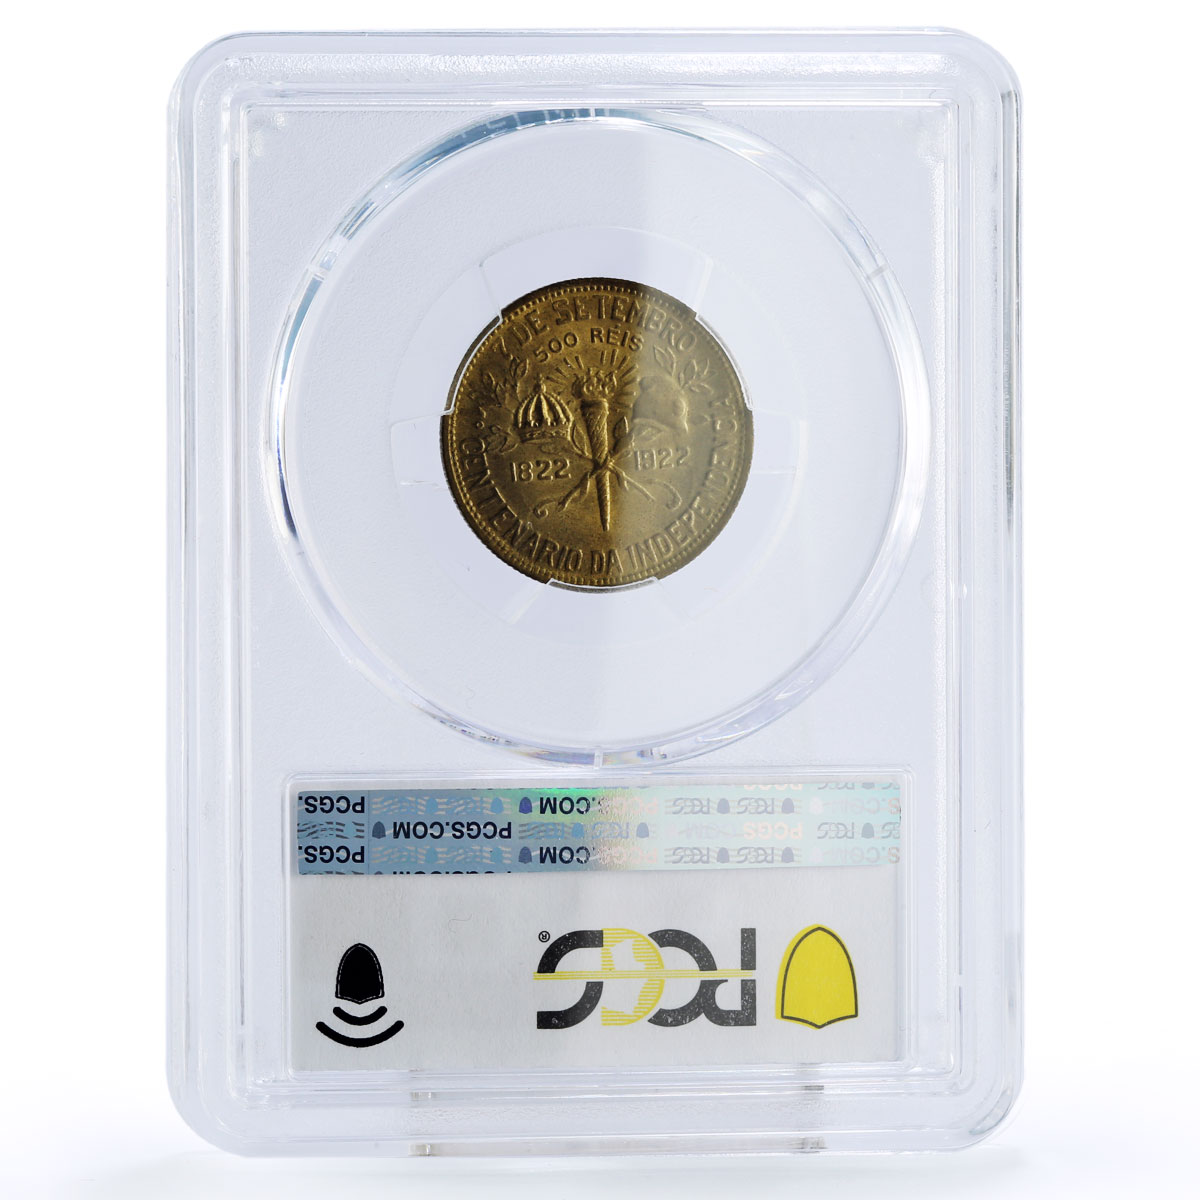 Brazil 500 reis Independence President Pessoa KM521 MS64 PCGS AlBronze coin 1922